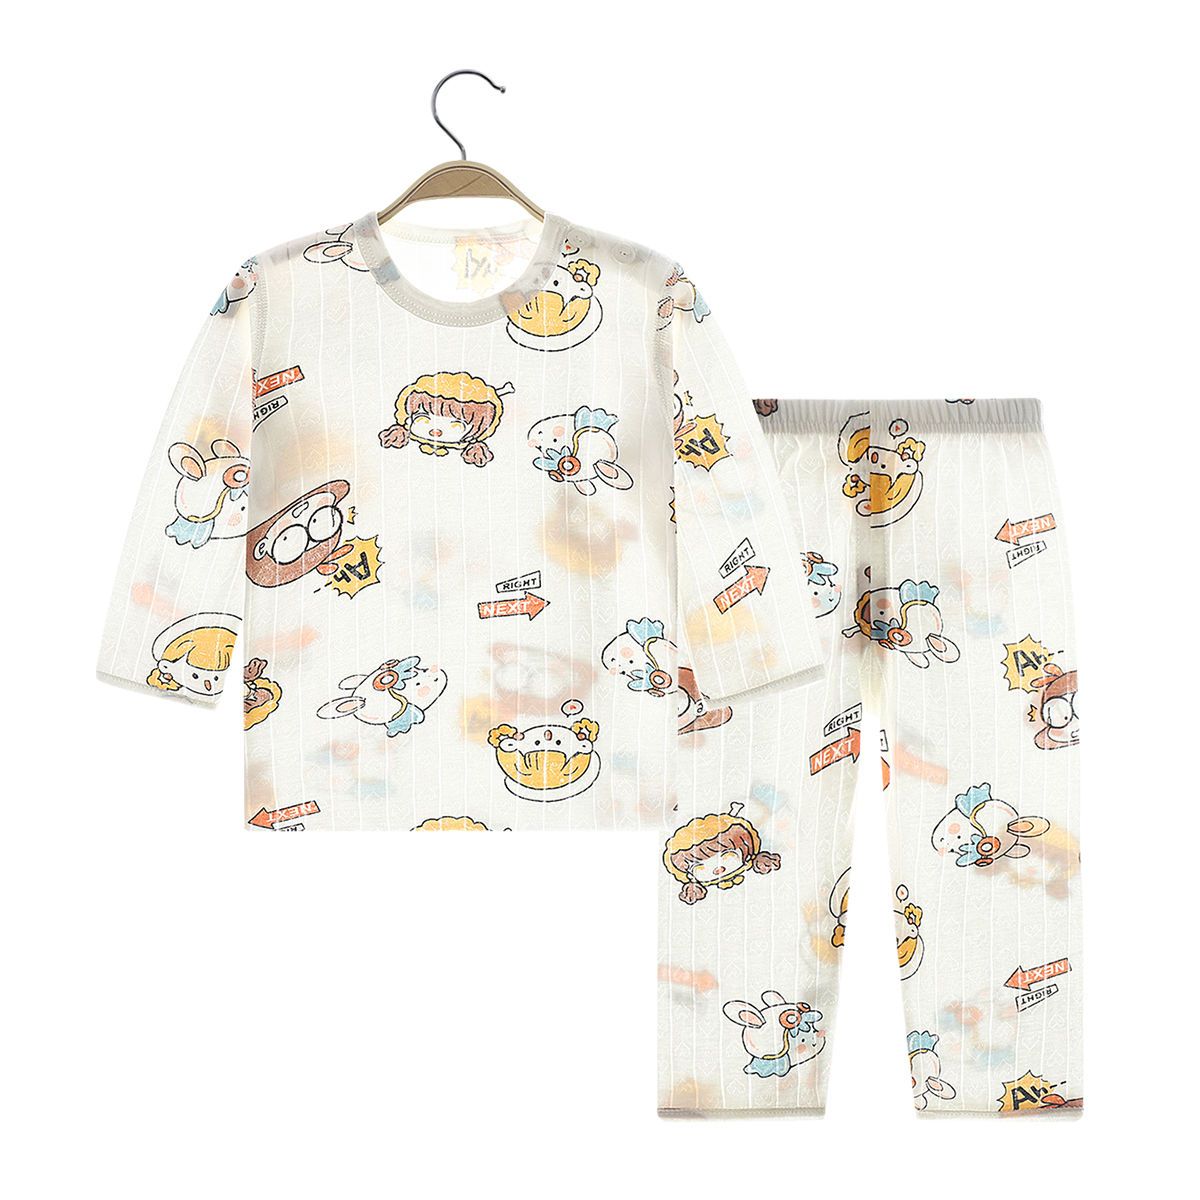 Children's underwear set pure cotton boneless long-sleeved long-sleeved long-sleeved baby pajamas home clothes for boys and girls